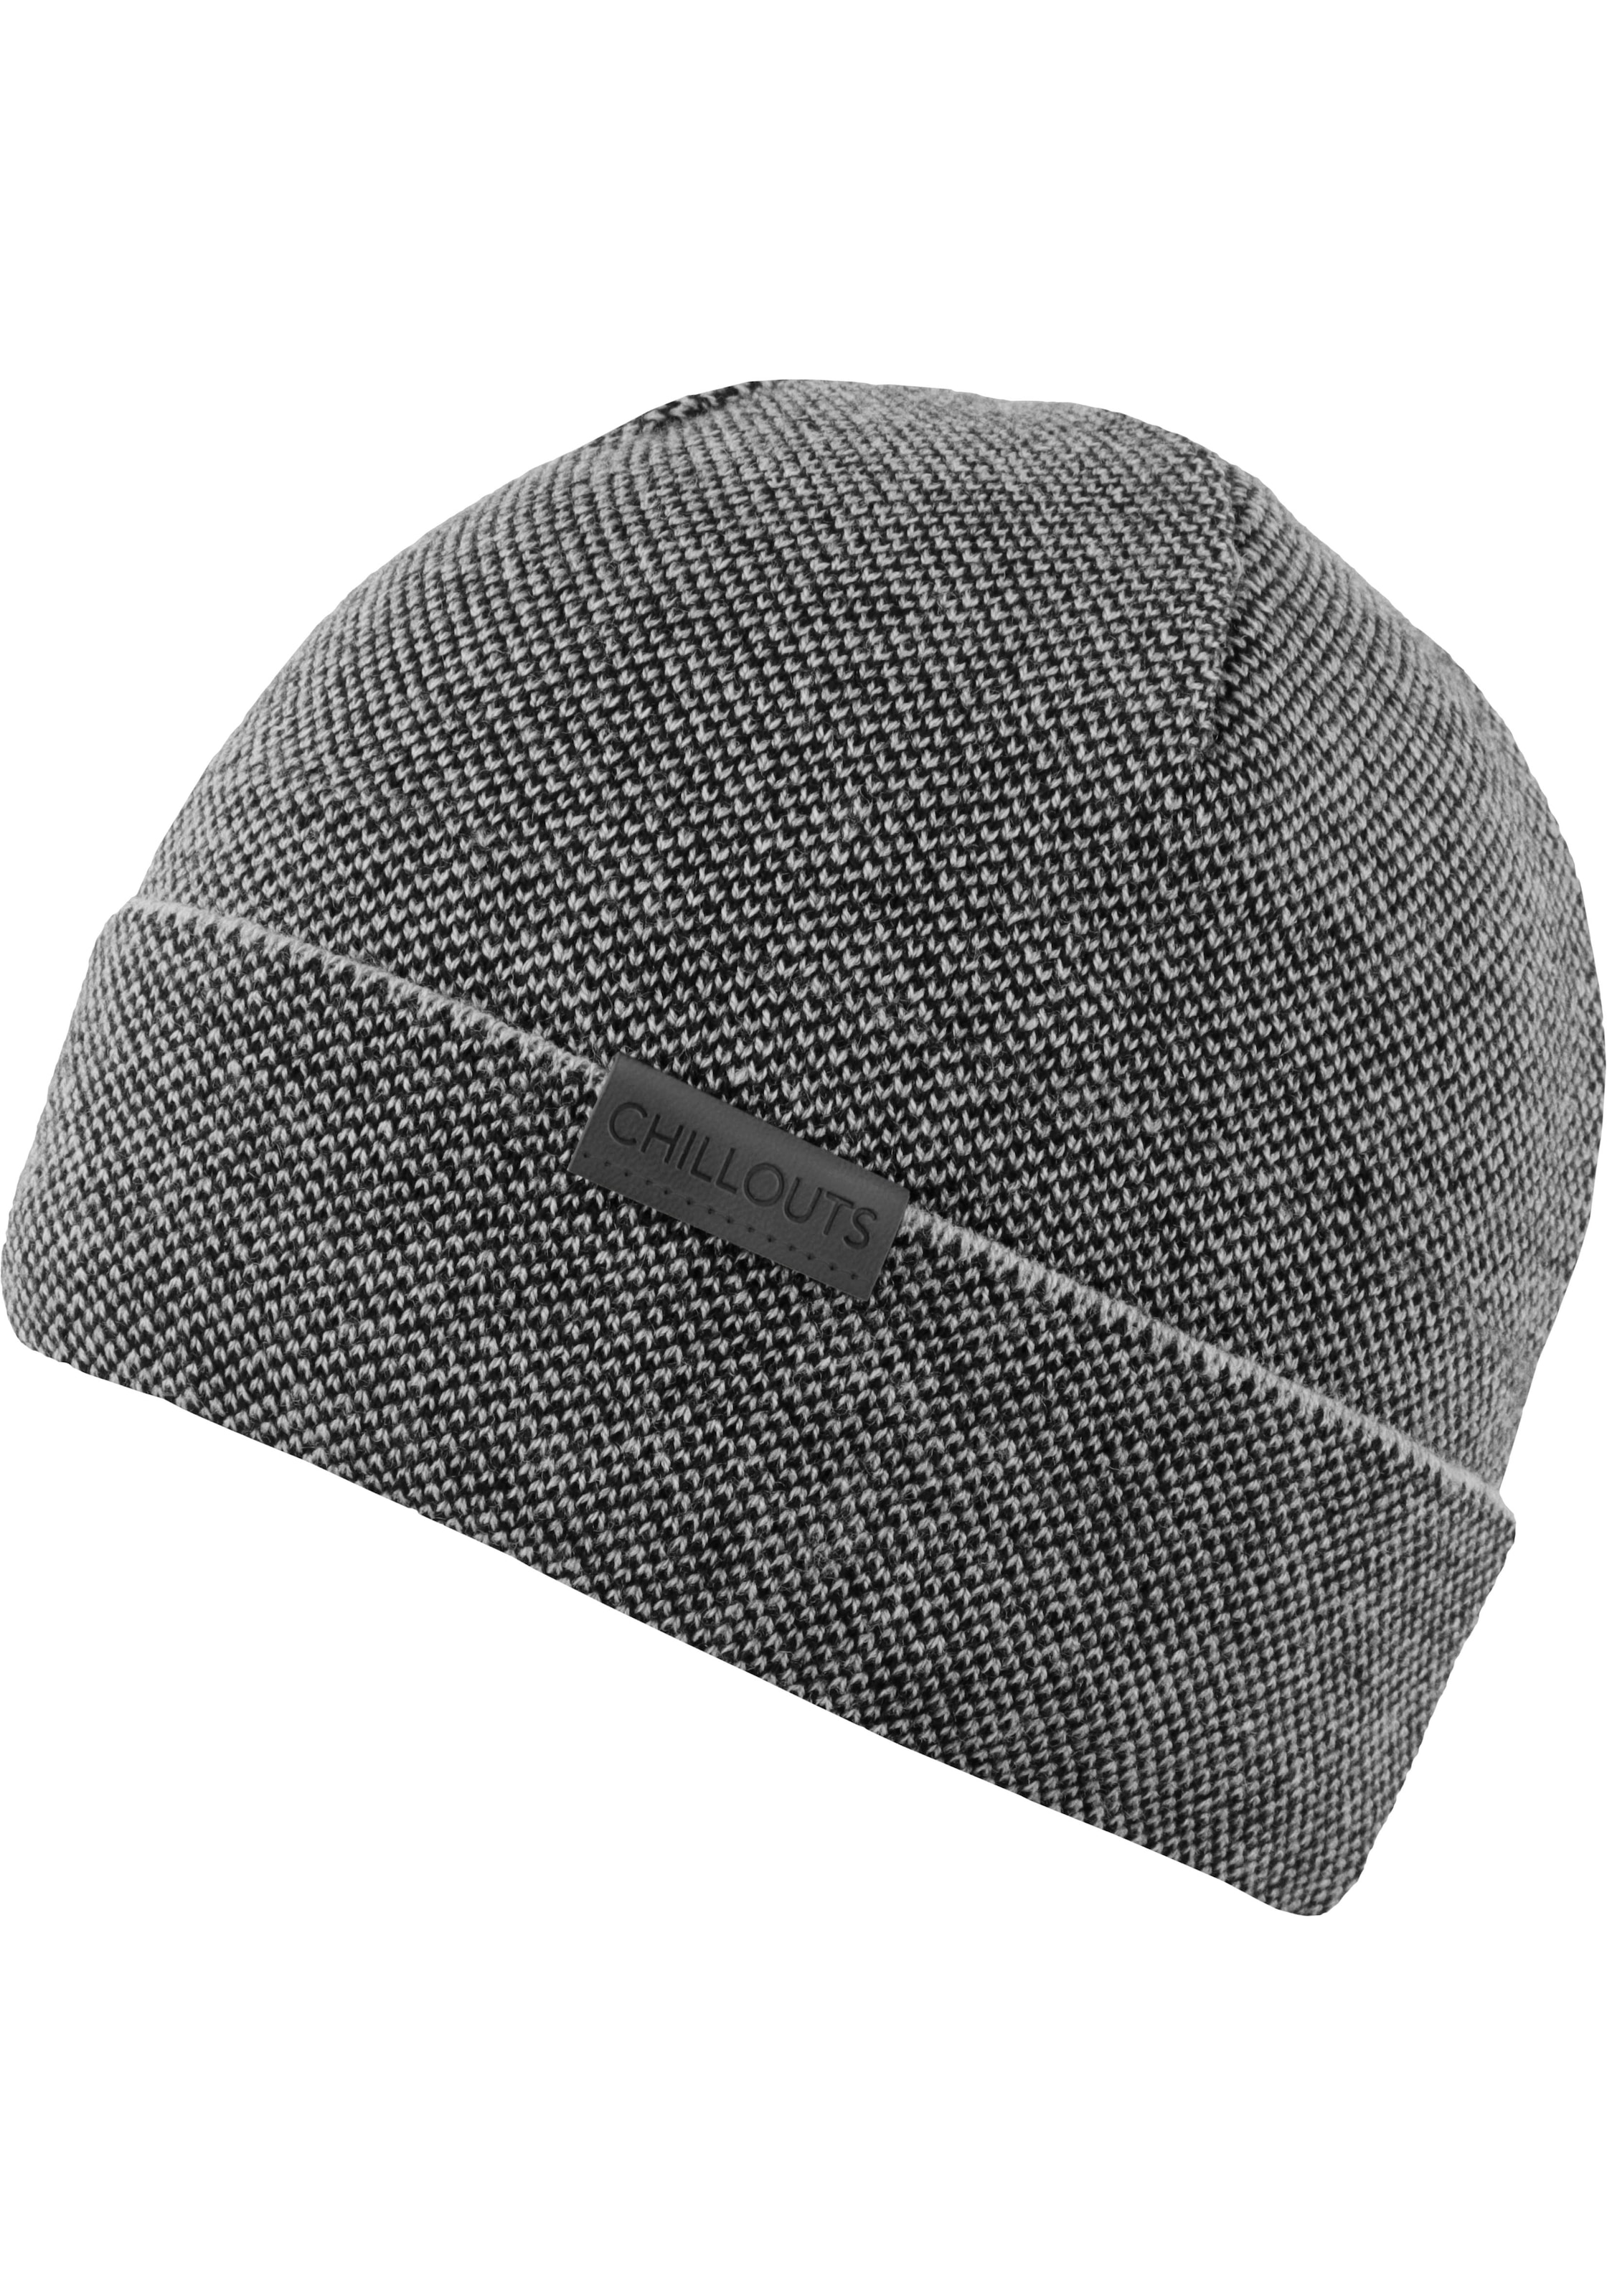 Strickmütze »Kilian OTTO chillouts online Hat« shoppen bei